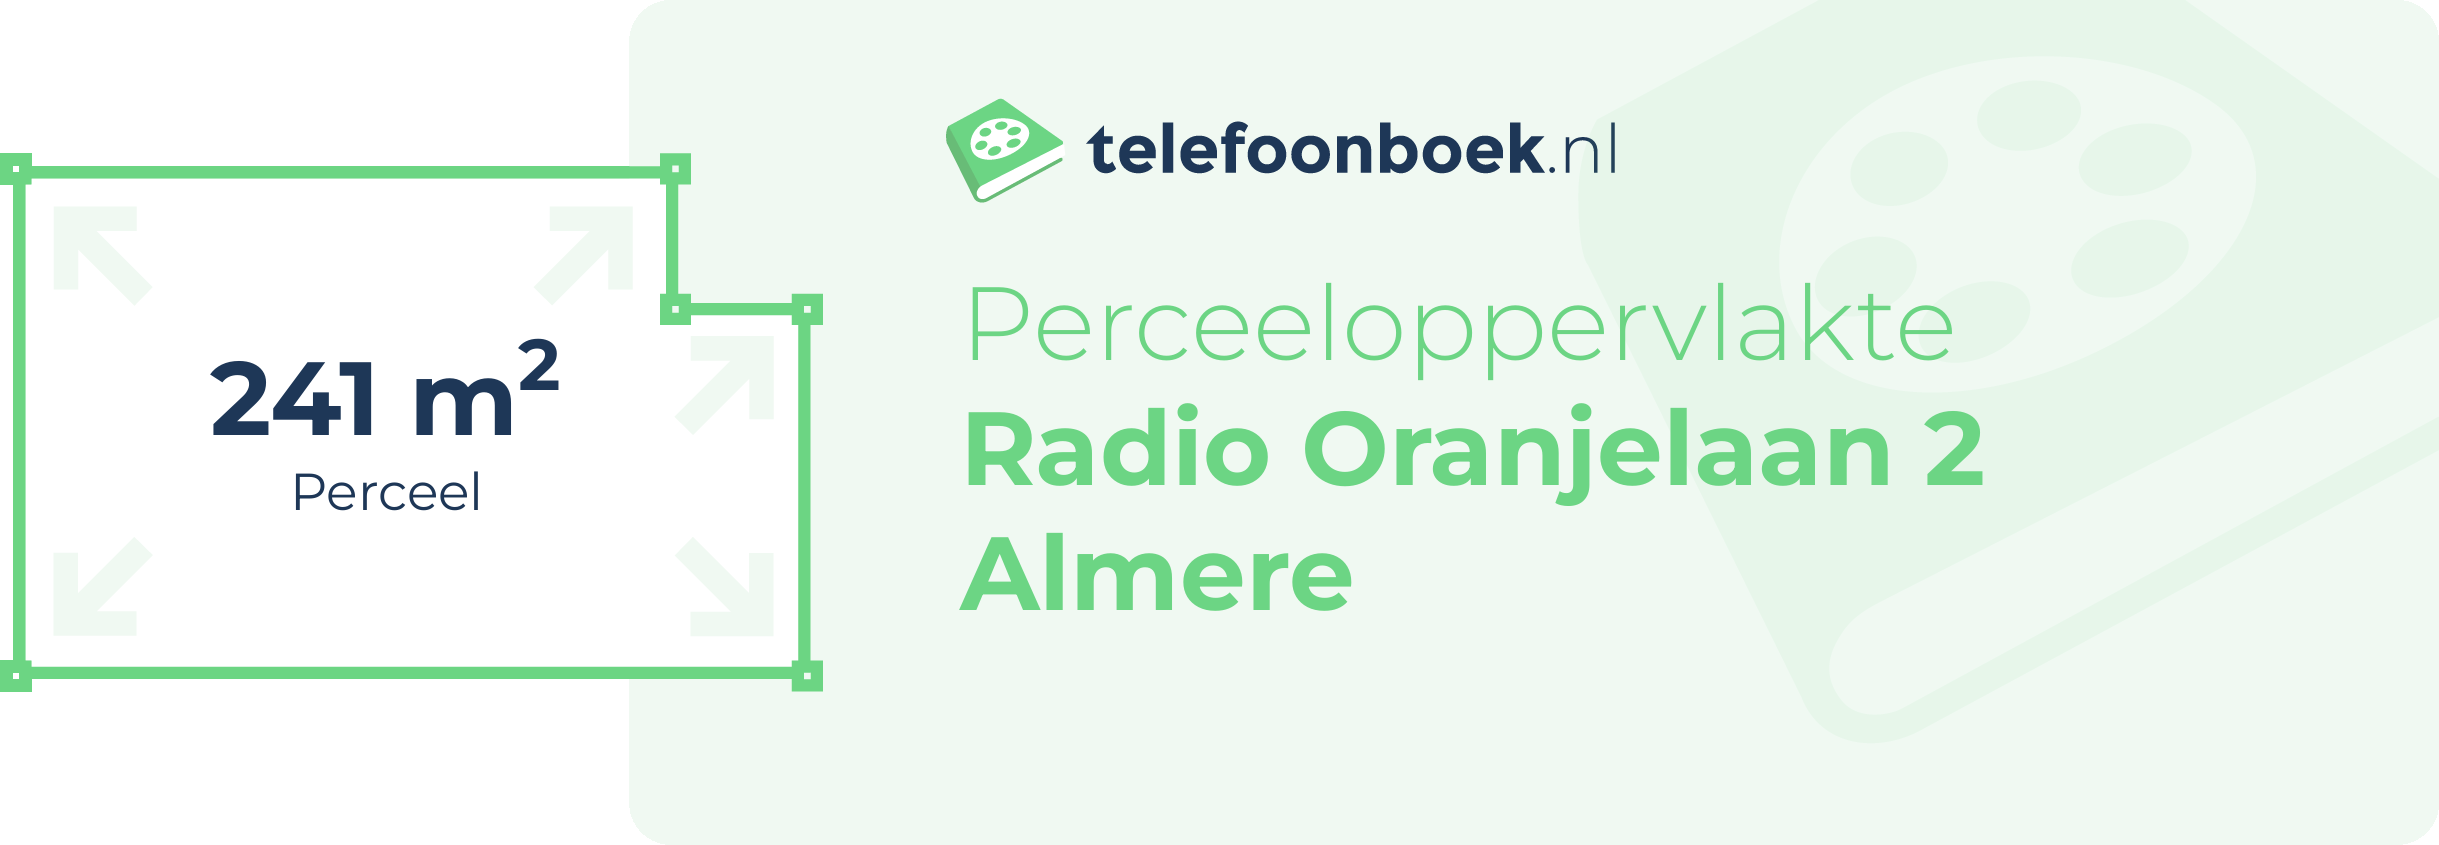 Perceeloppervlakte Radio Oranjelaan 2 Almere